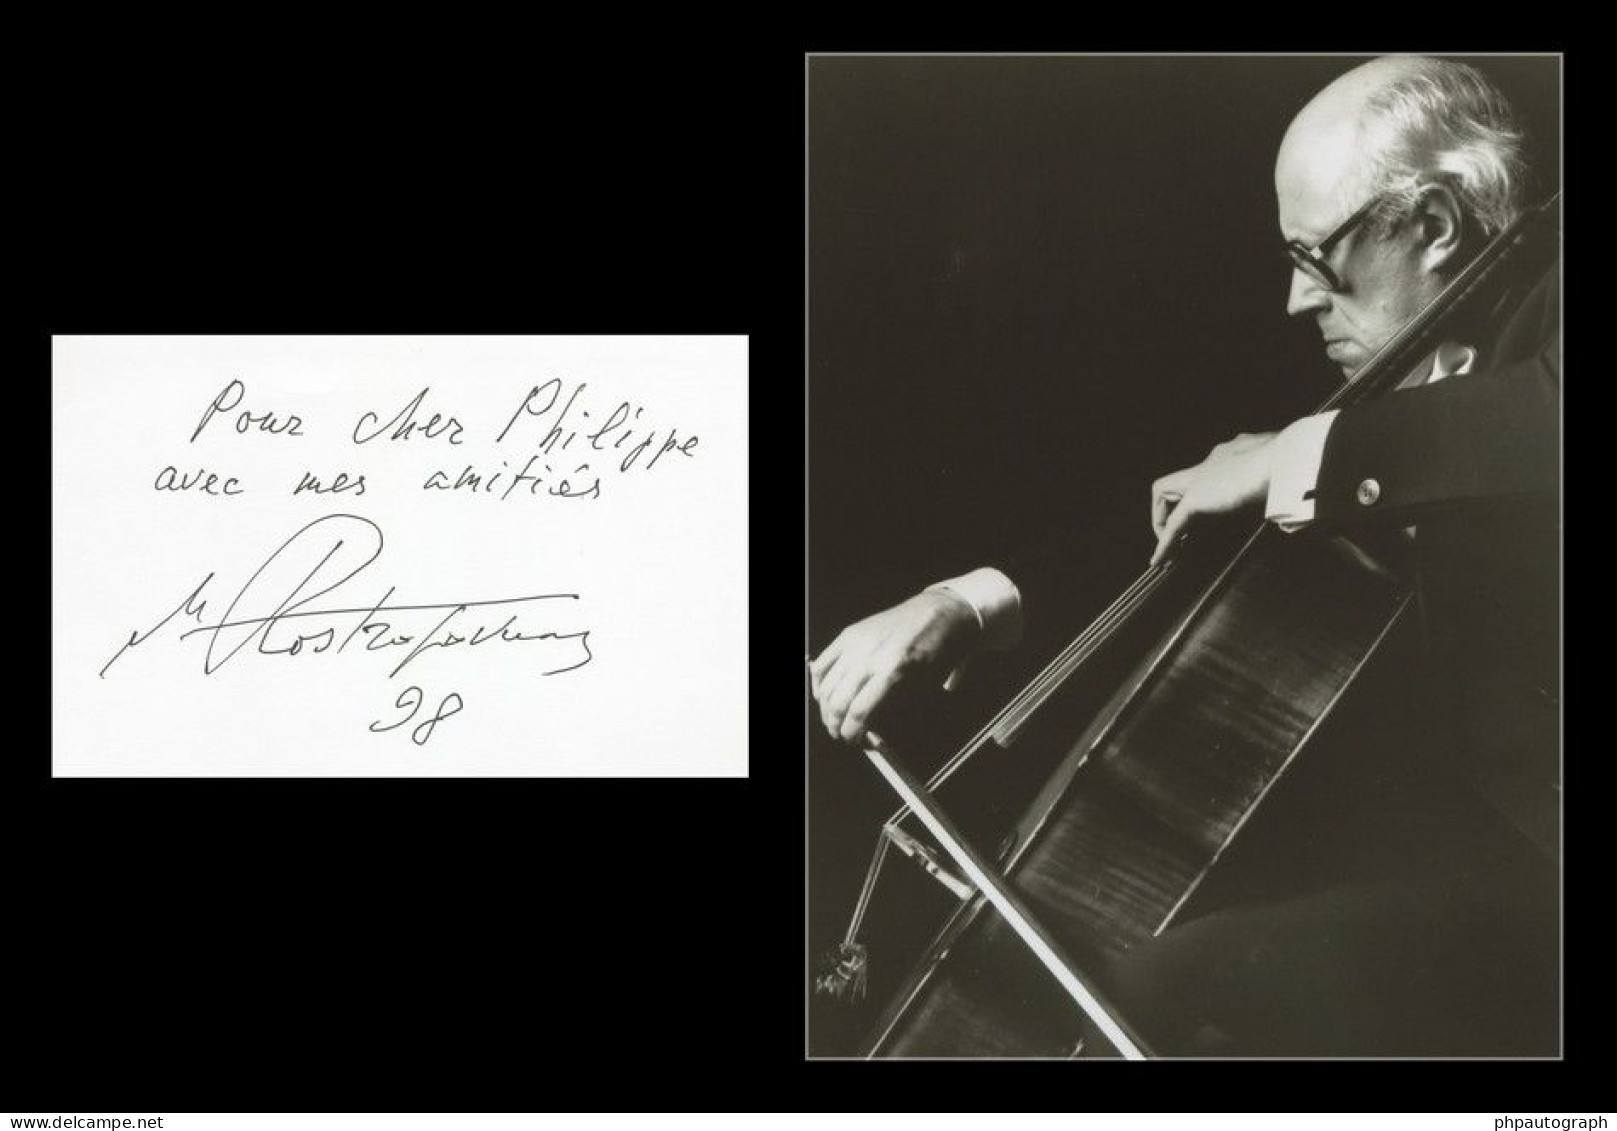 Mstislav Rostropovich (1927-2007) - Cellist - Signed Card + Photo - 1998 - COA - Sänger Und Musiker